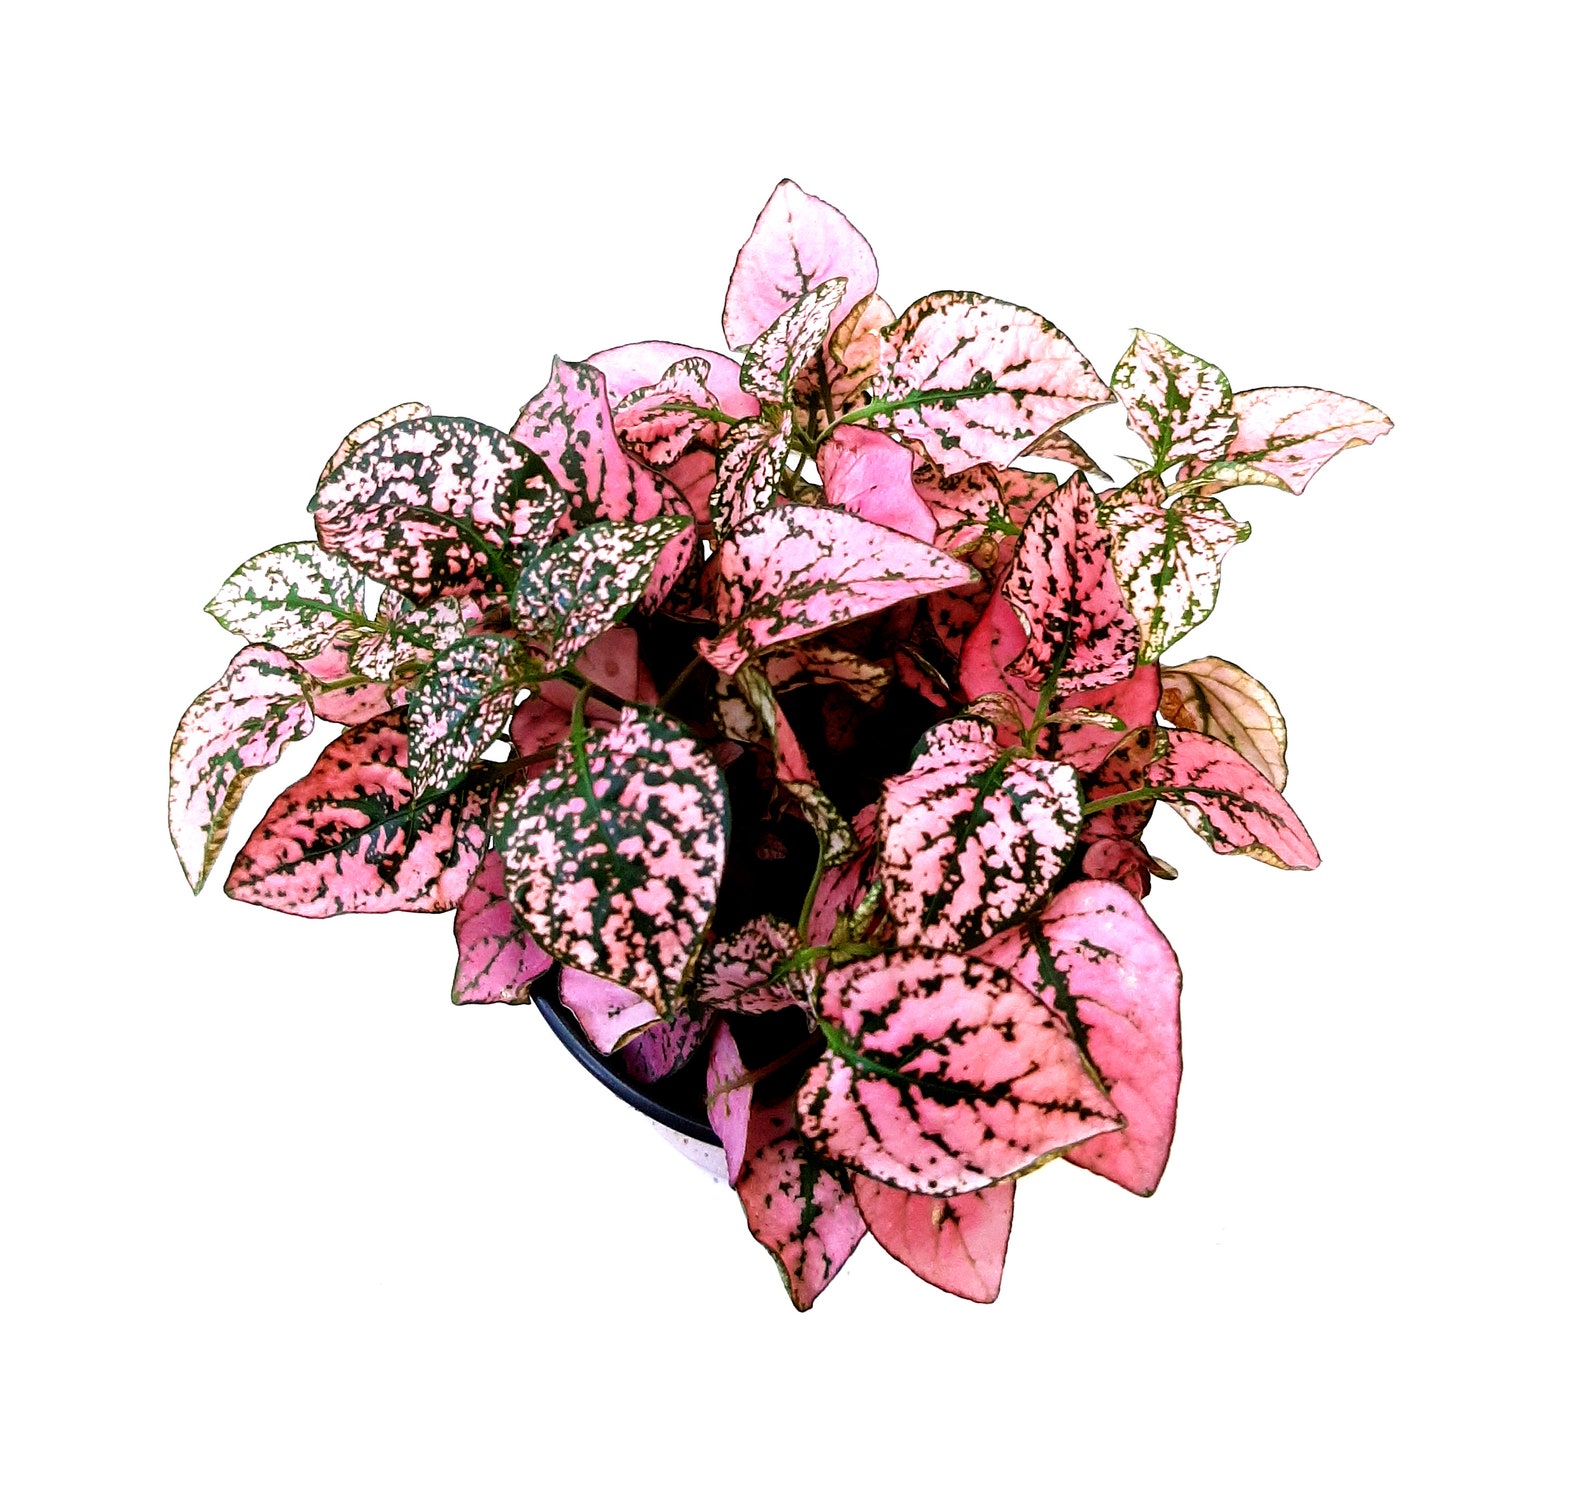 3.5pot of pink polka pot plants Hypoestes phyllostachya | Etsy